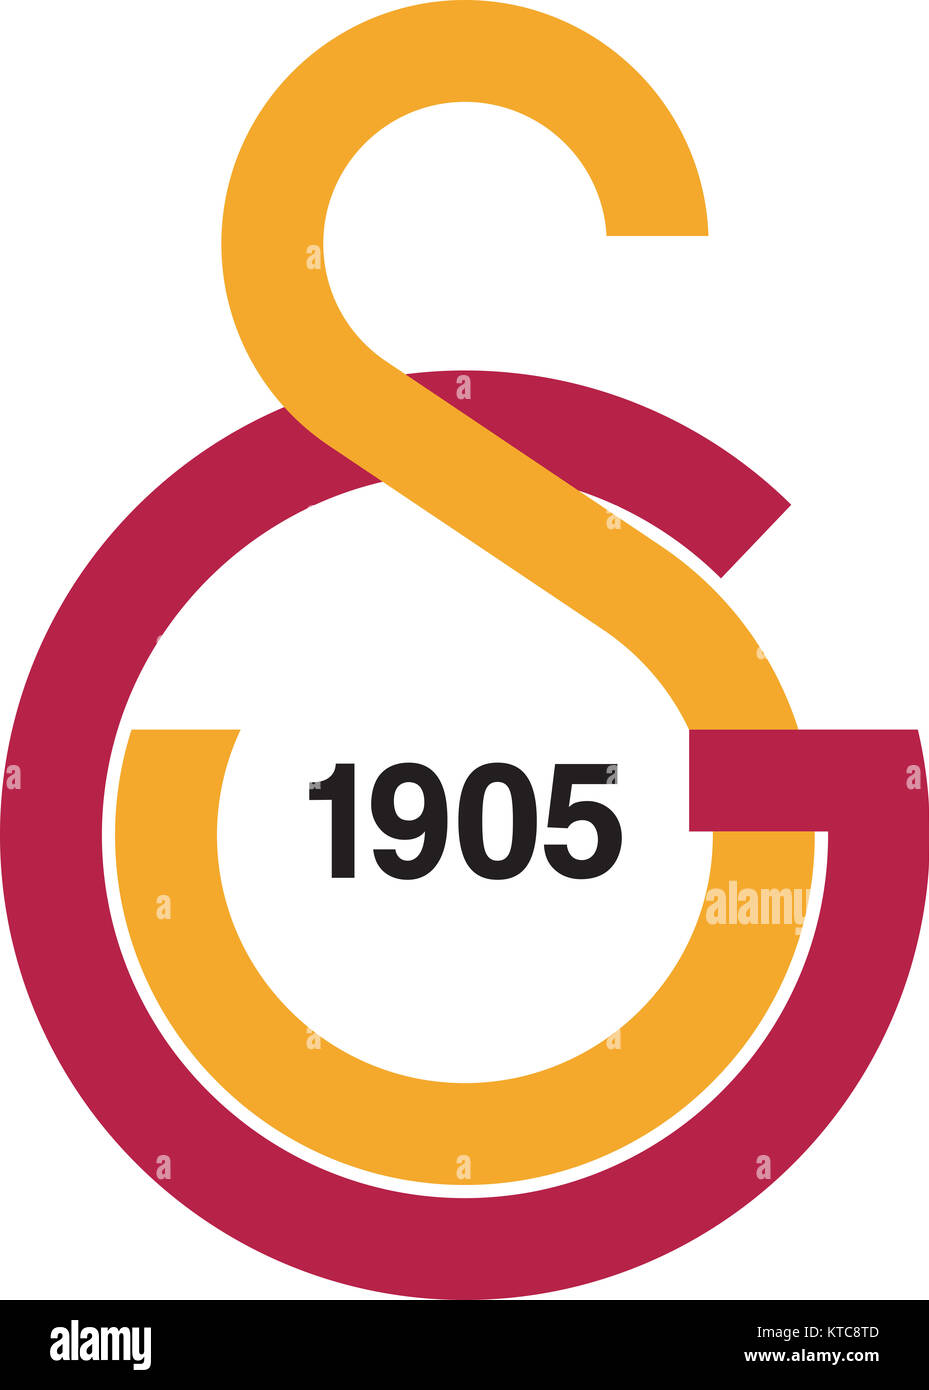 galatasaray spor kulubu logo Stock Photo